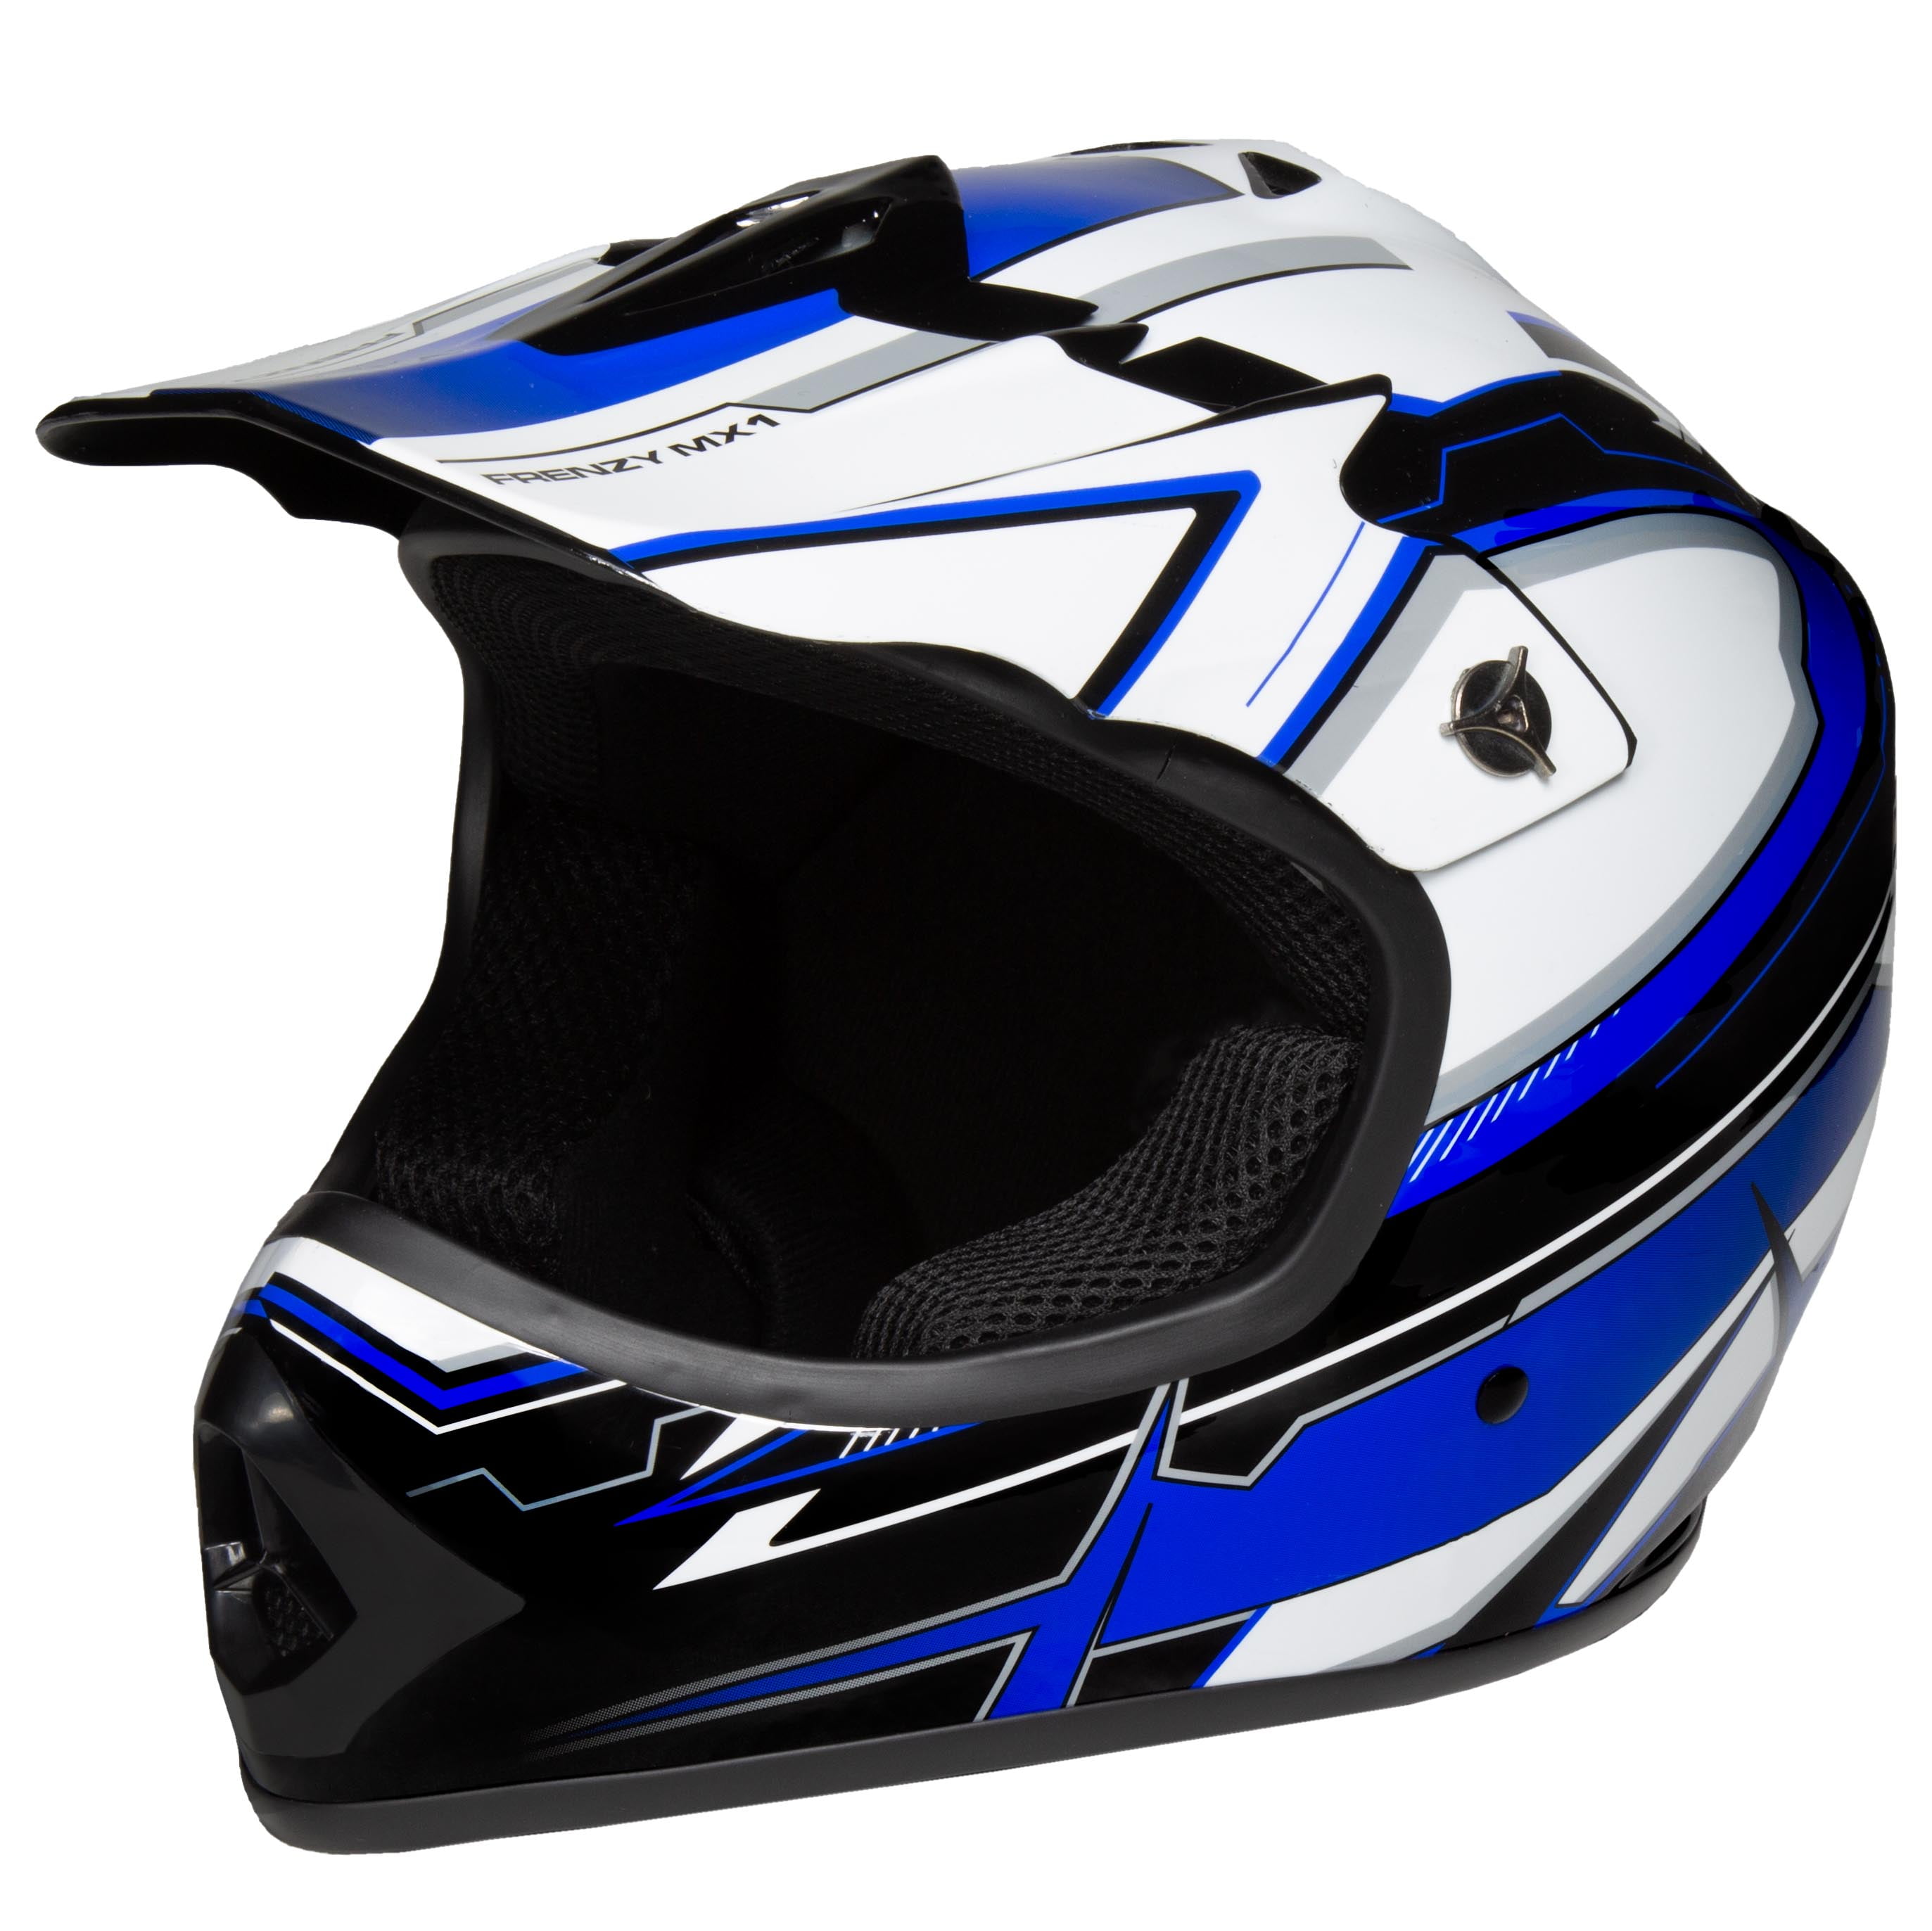 AS1698 BNWT Aust Std Kids Size Motocross Helmet XS-XL Blue & Blue Goggles